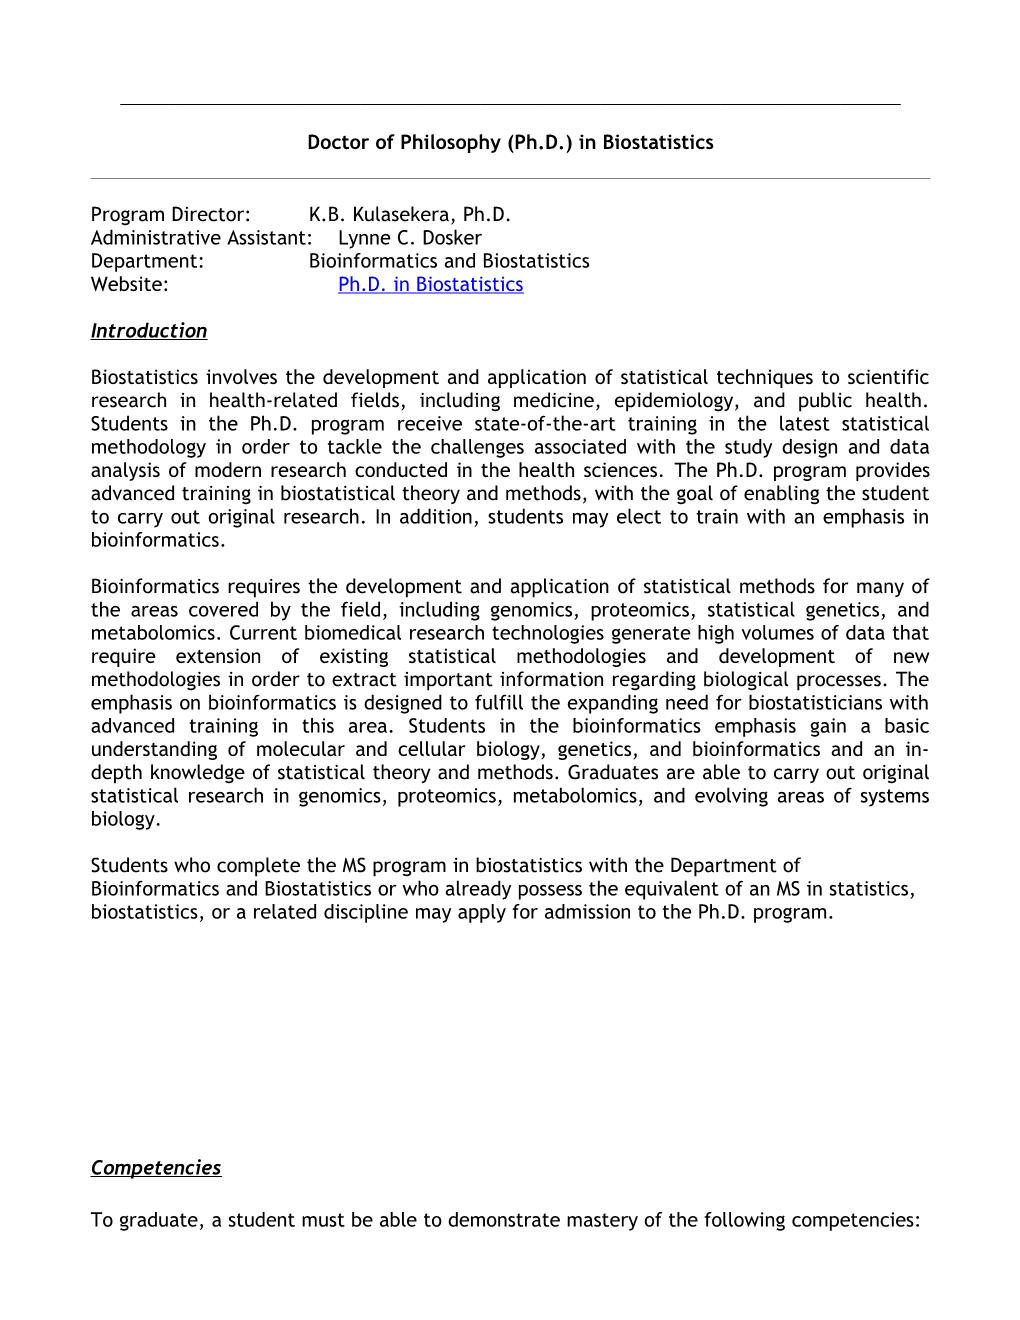 Doctor of Philosophy in Biostatistics V2015.08.28-04